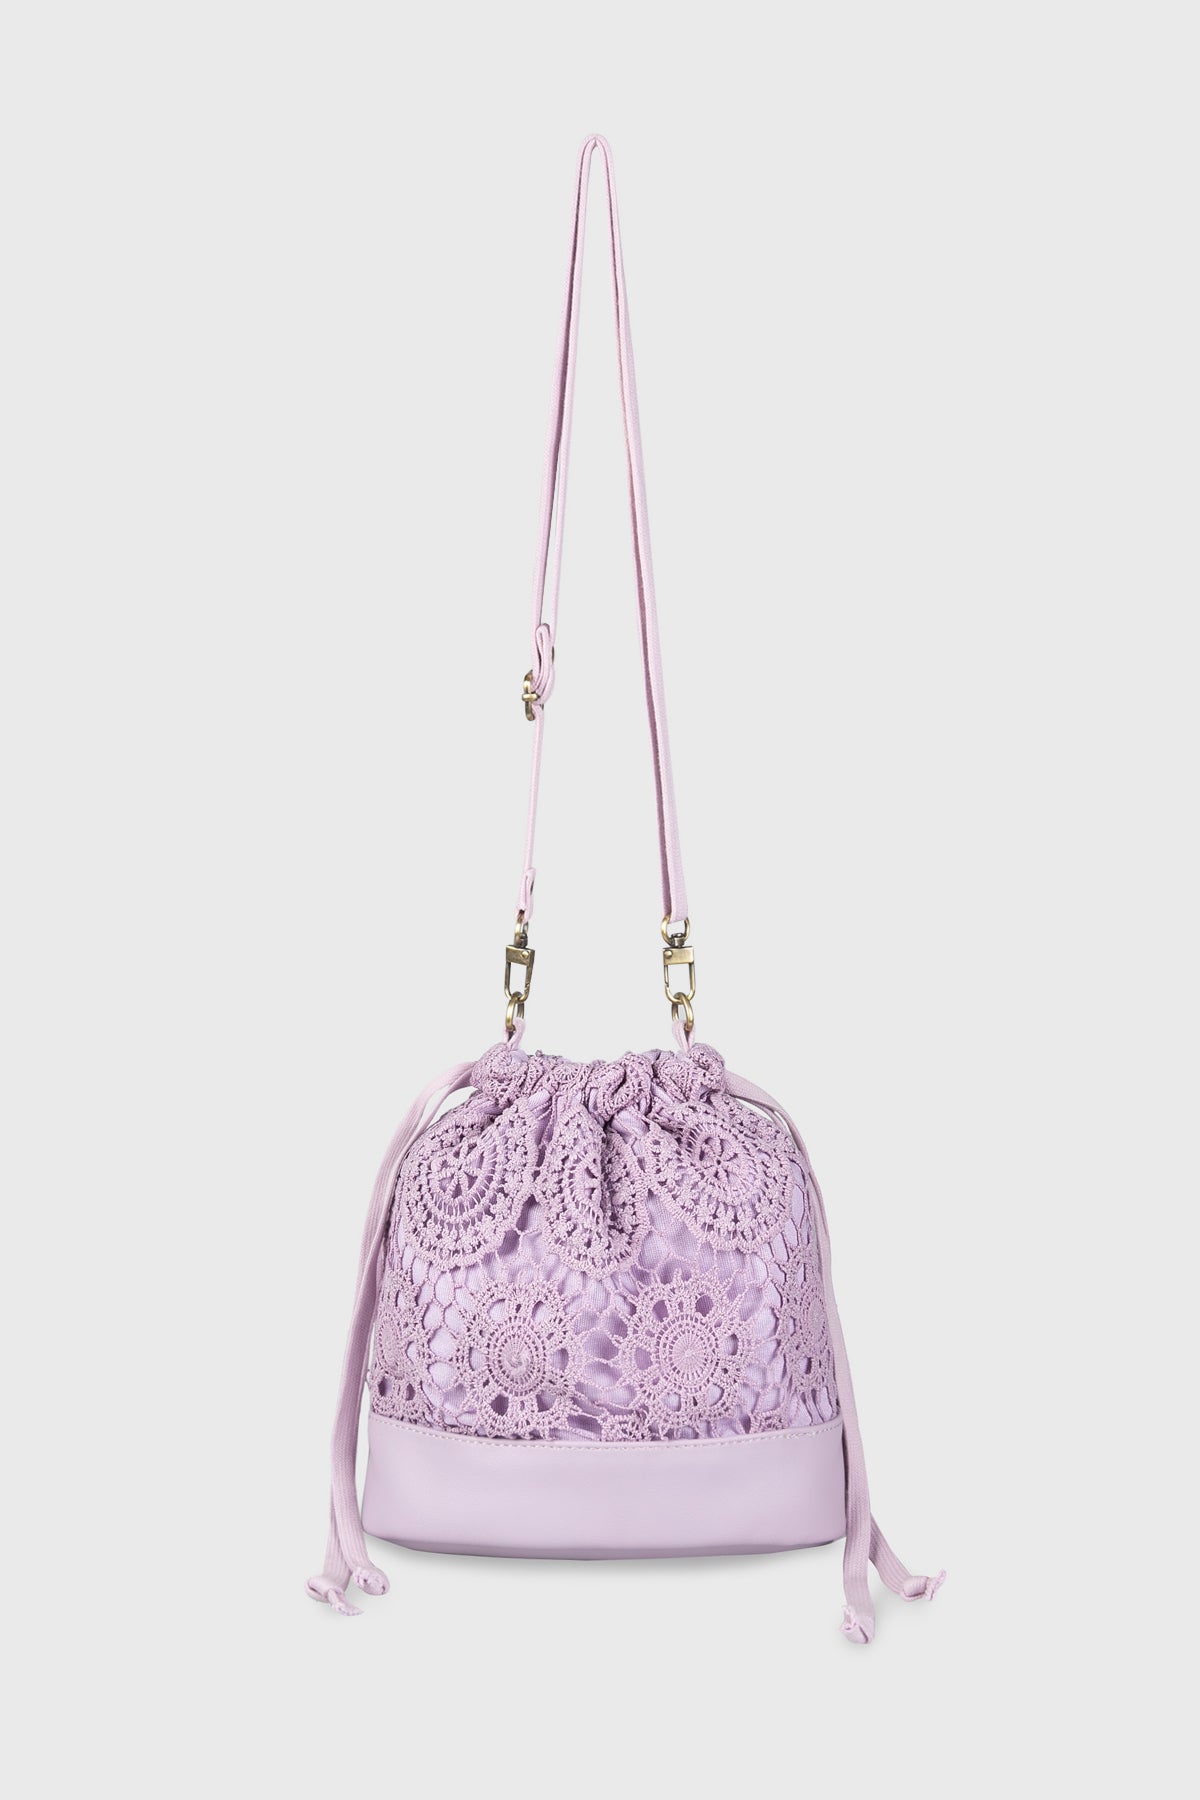 Cassia Bag in Lilac